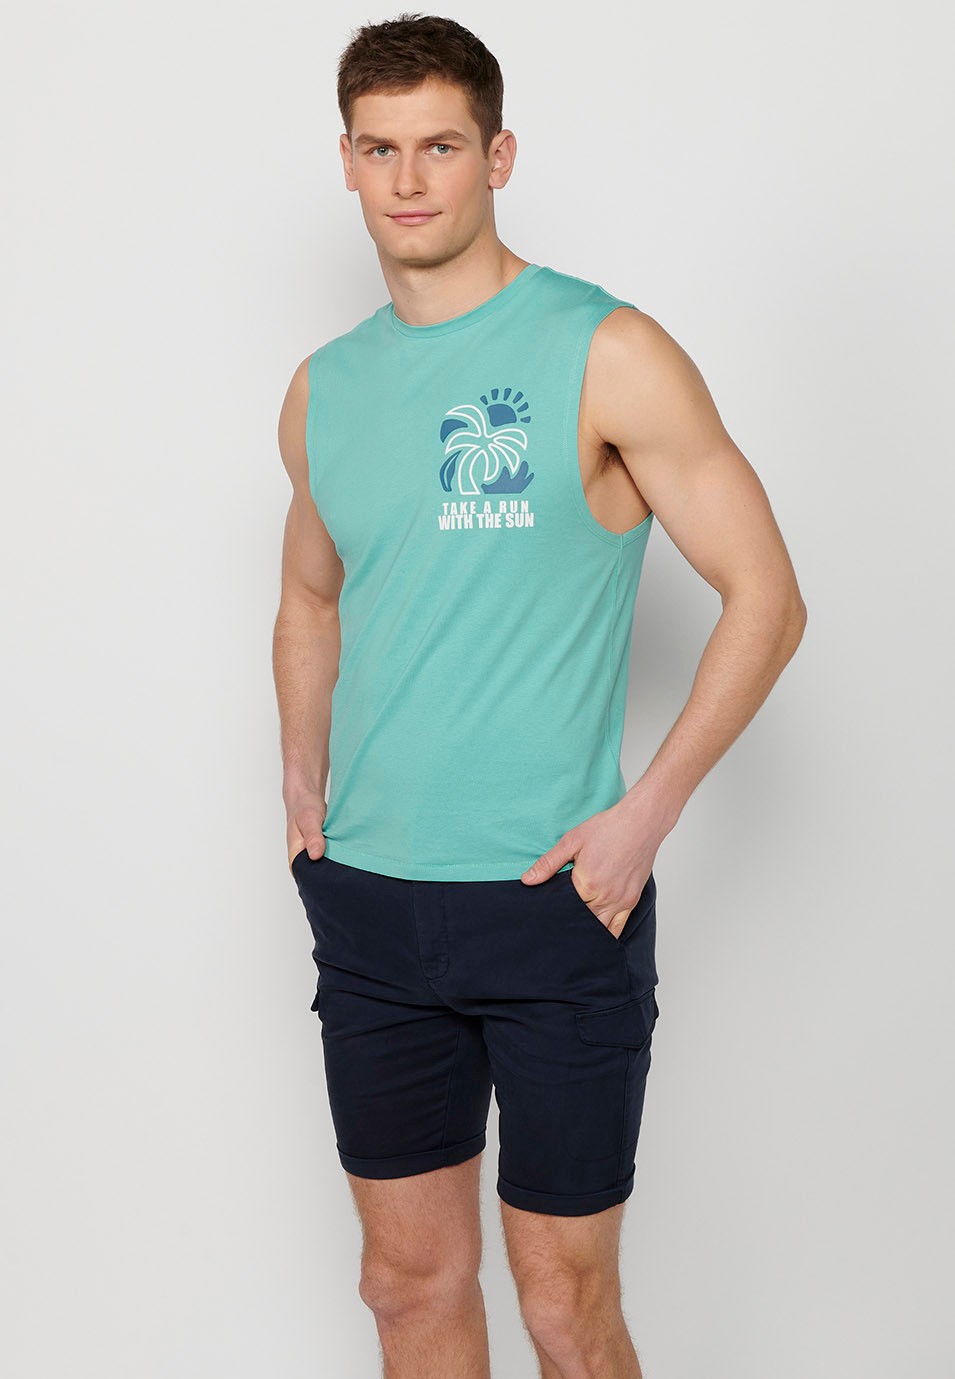 Ärmelloses T-Shirt, Rückenaufdruck „Take a run with the sun“, Mintfarbe für Herren